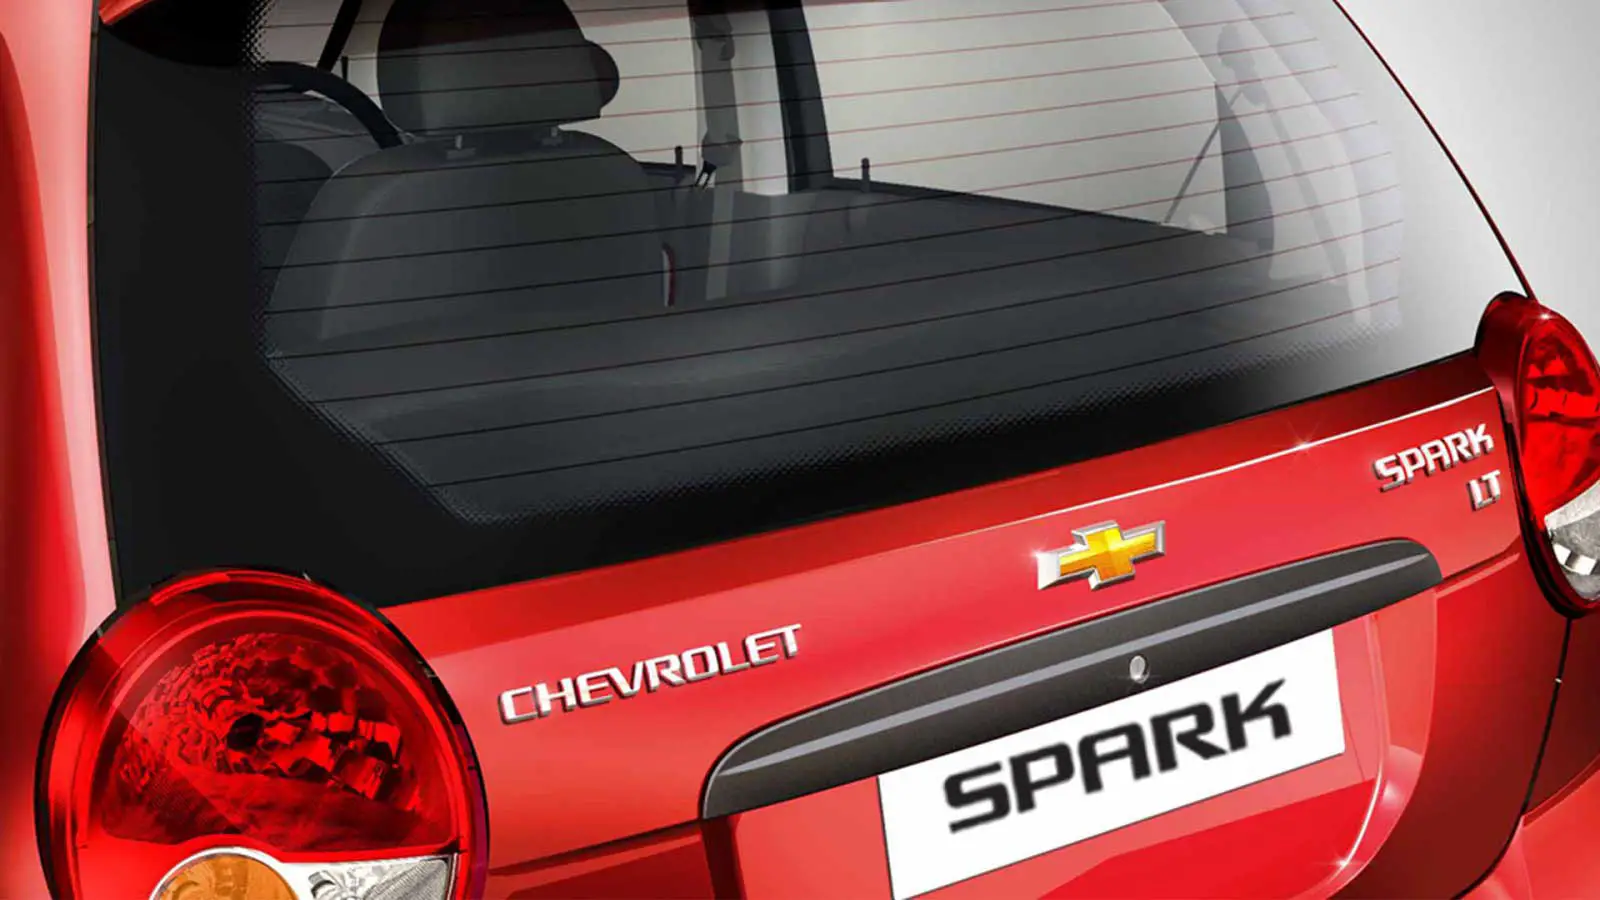 Chevrolet Spark 1.0 BS-IV OBDII Exterior